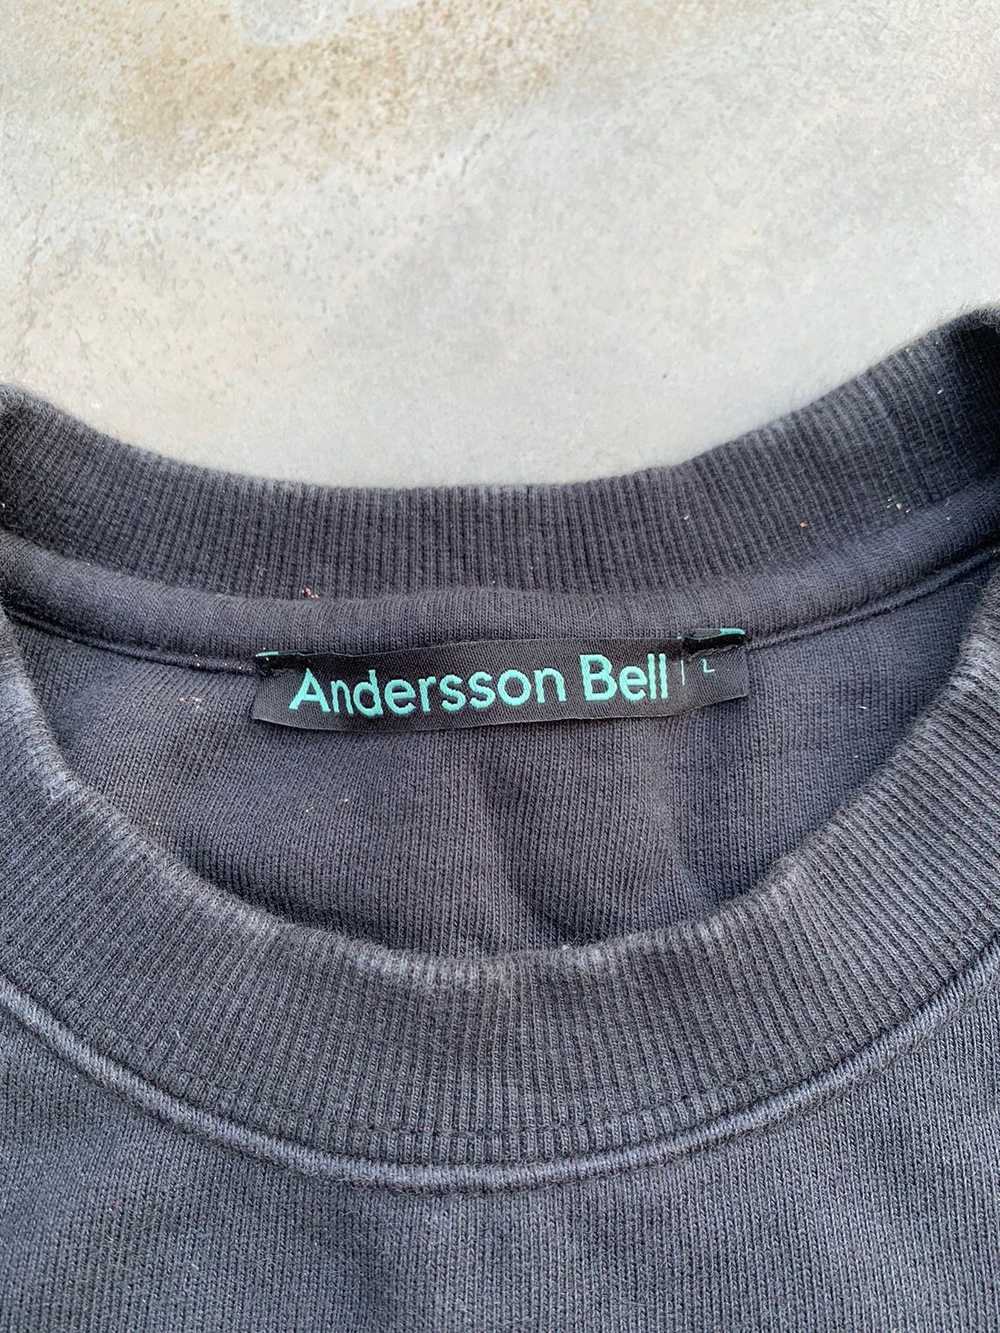 Andersson Bell Anderson Bell Rainbow Logo Sweatsh… - image 4